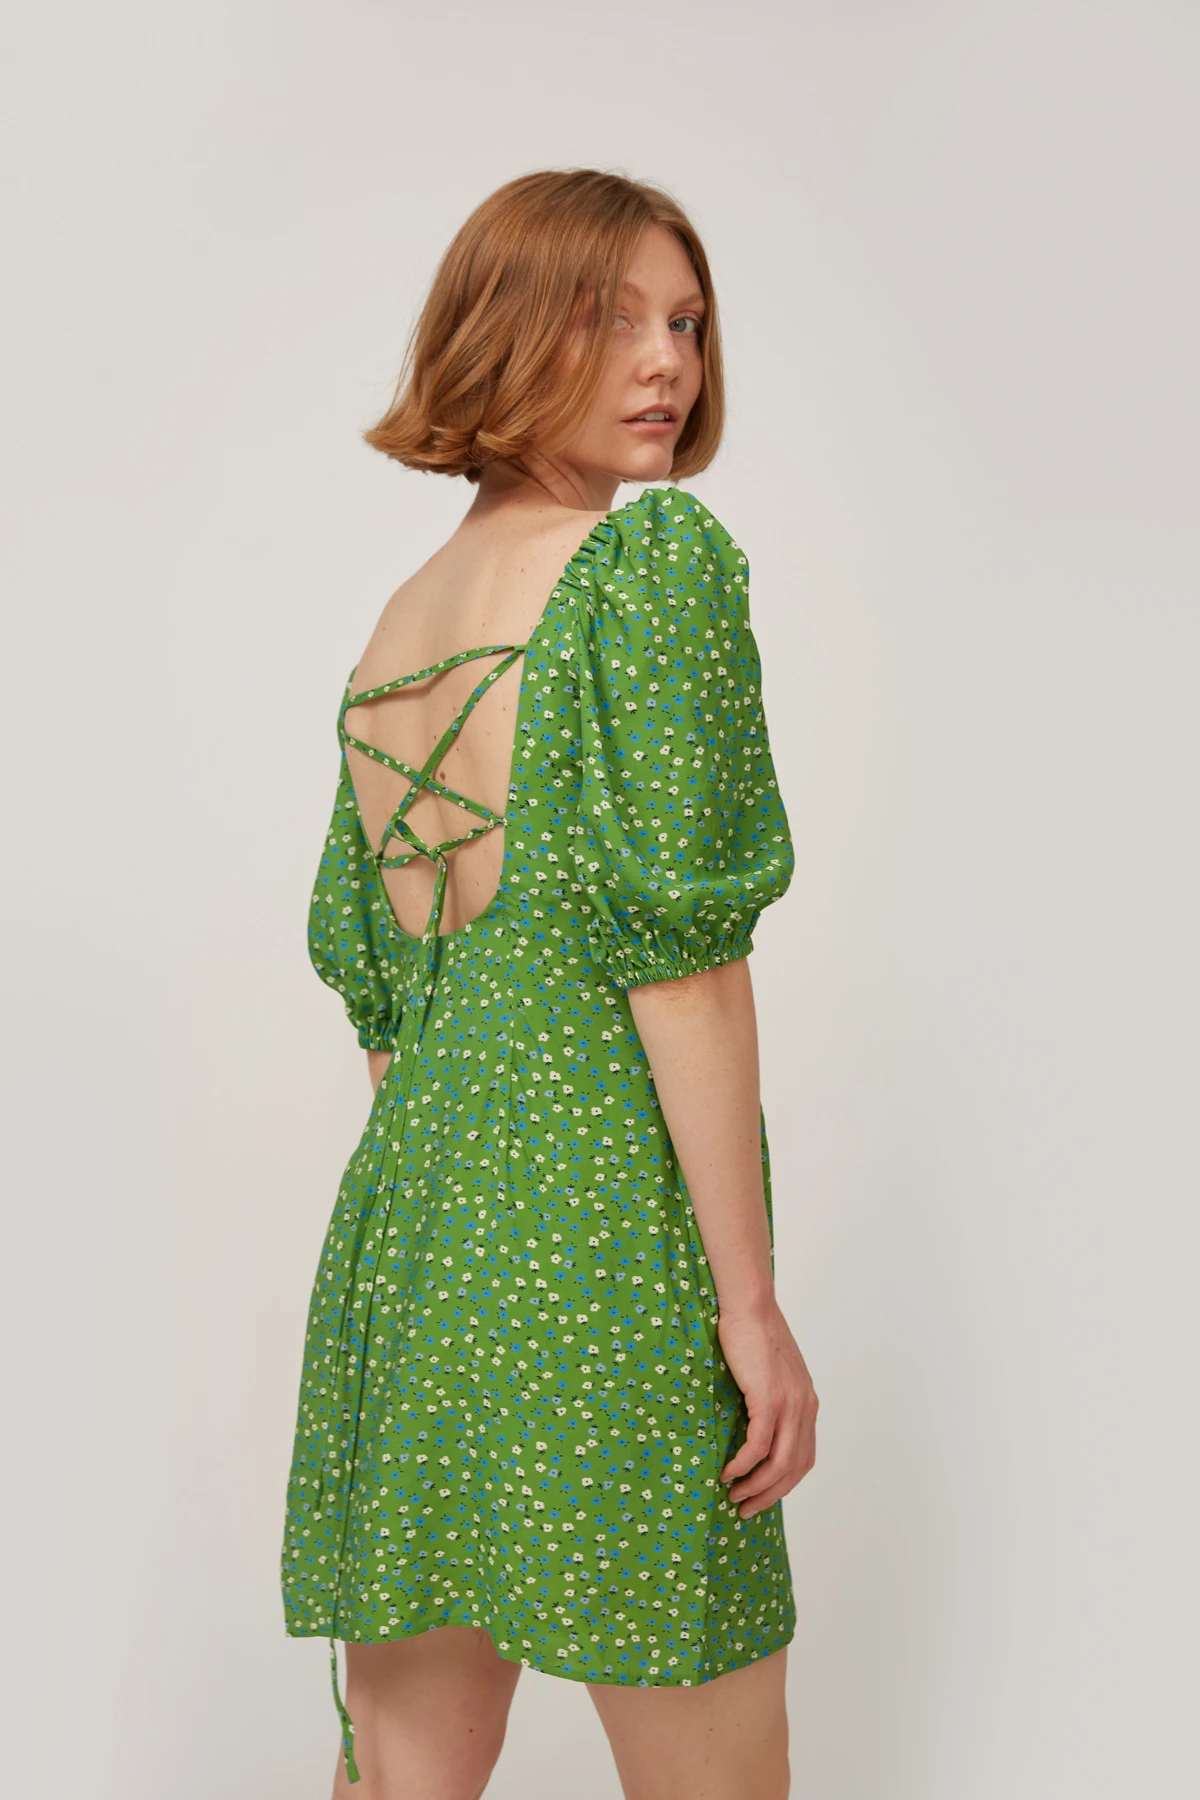 Green raylon mini dress with flower print, photo 1